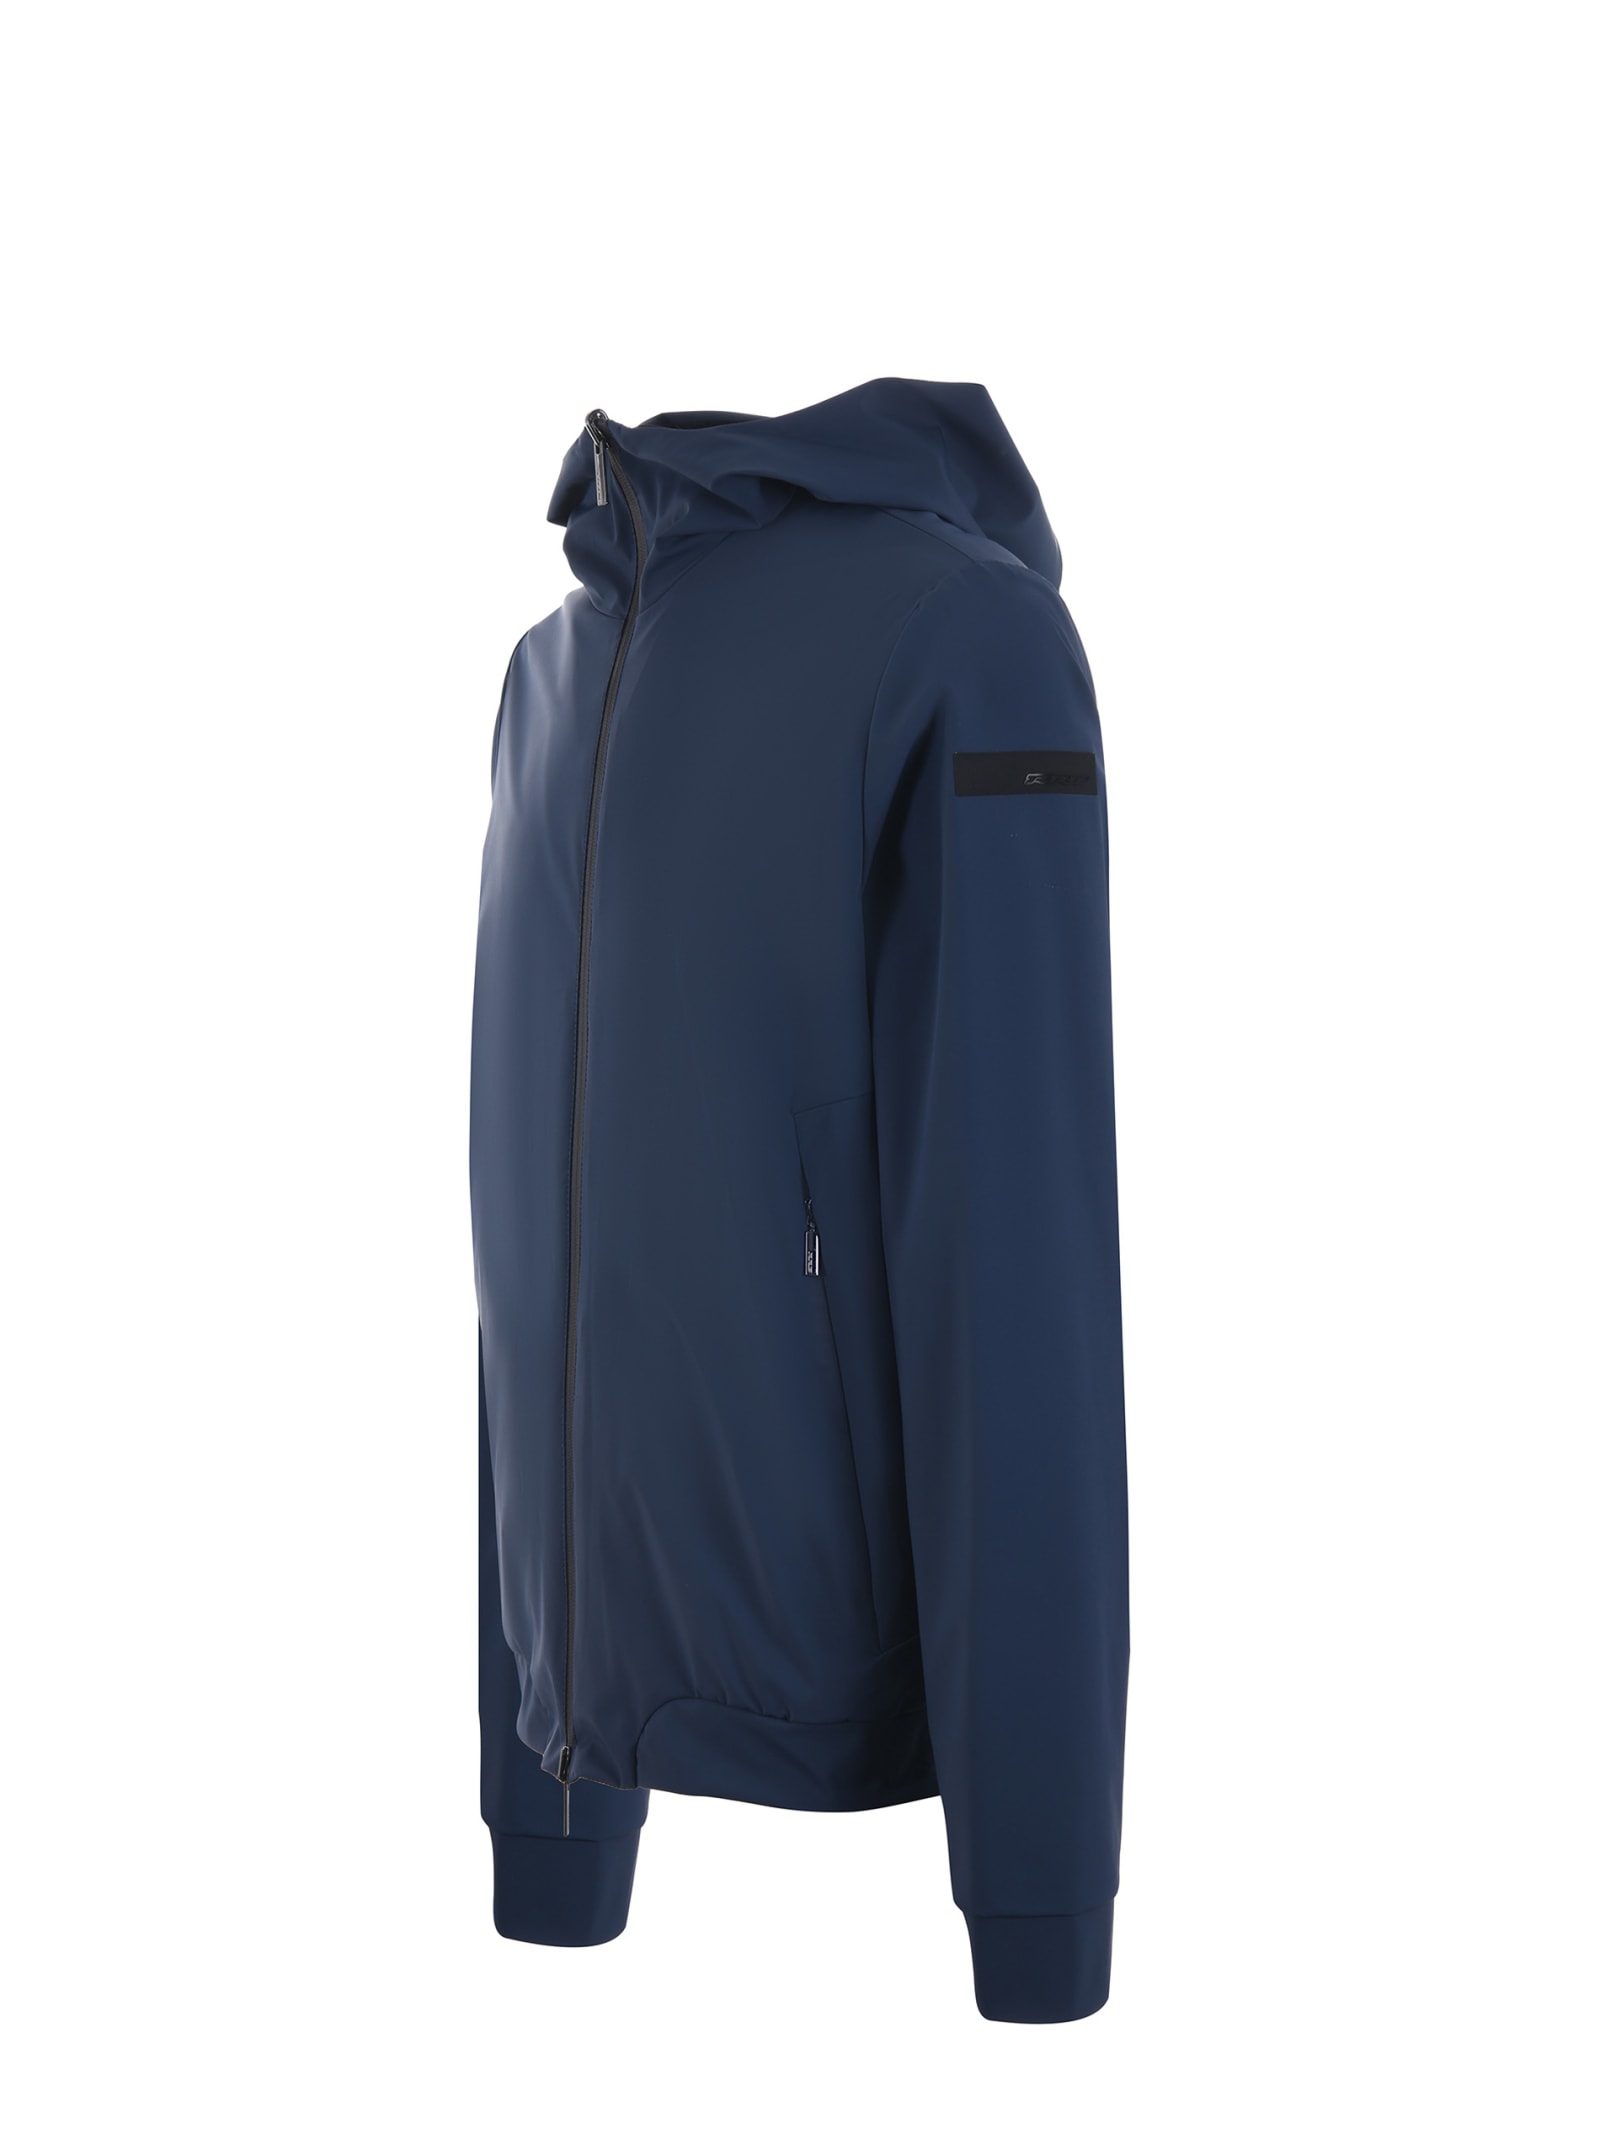 Shop Rrd - Roberto Ricci Design Reversible Rrd Jacket In Blu Scuro/nero